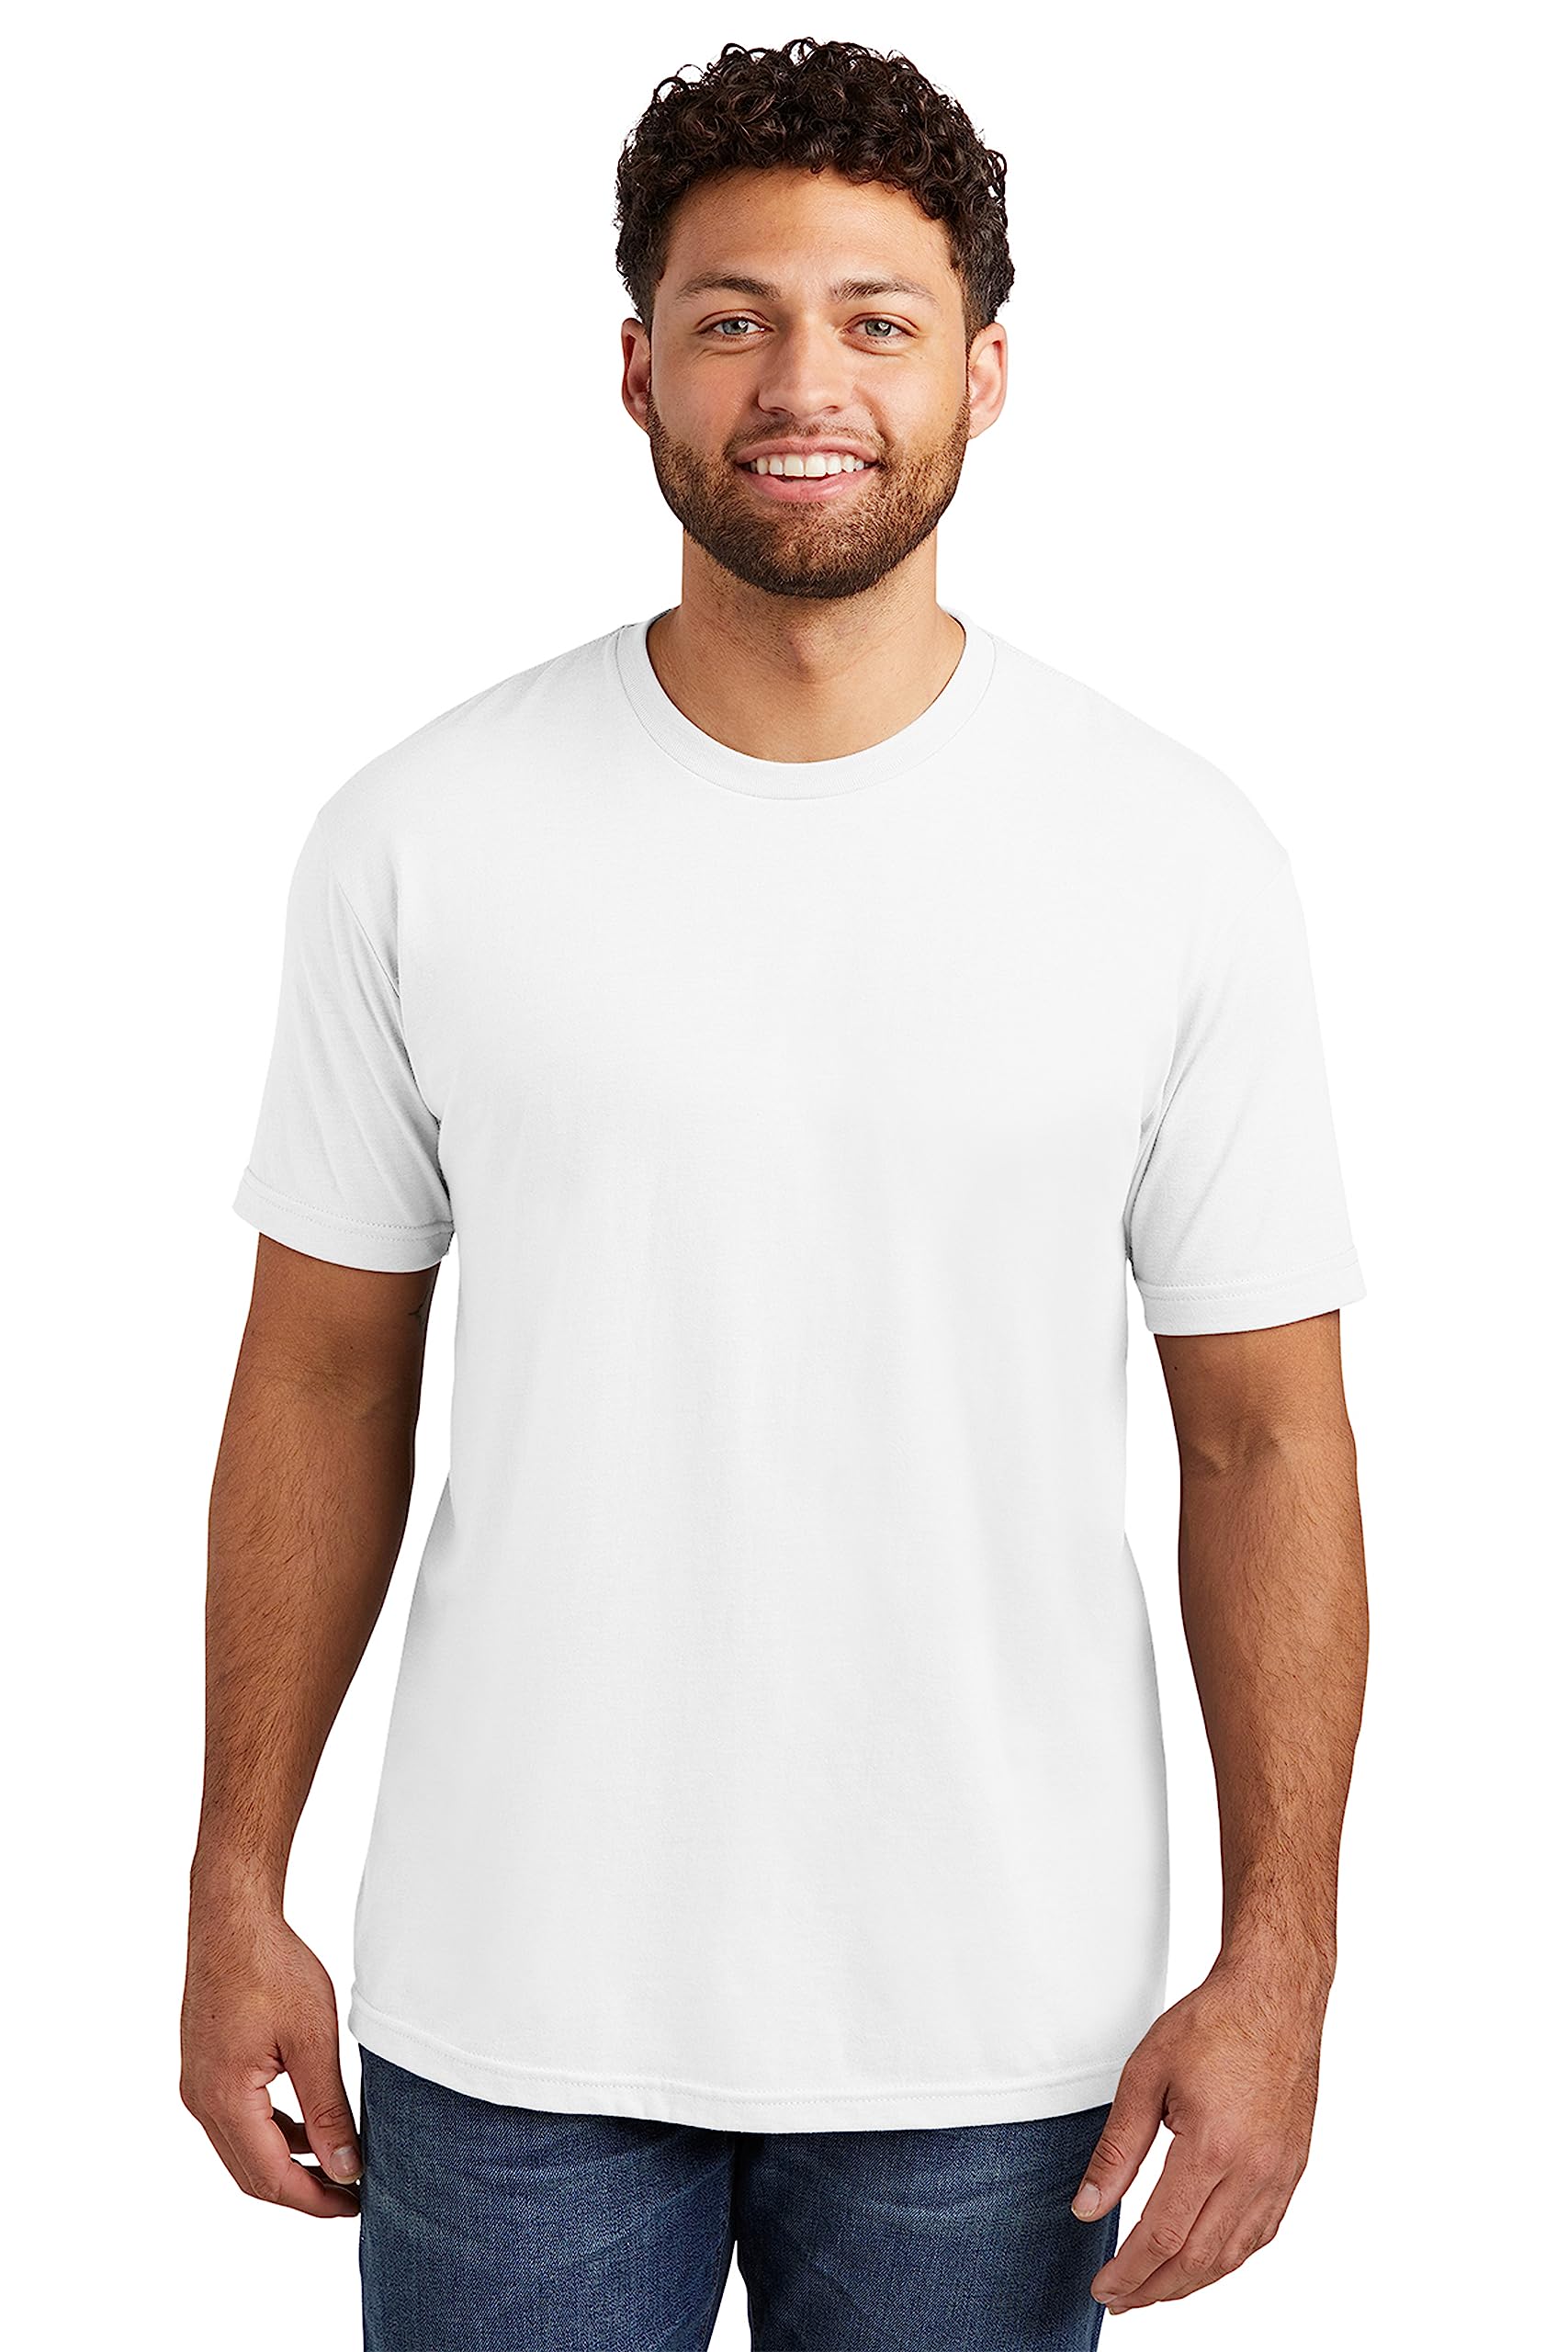 Gildan Men's Cotton Stretch T-Shirts, Multipack